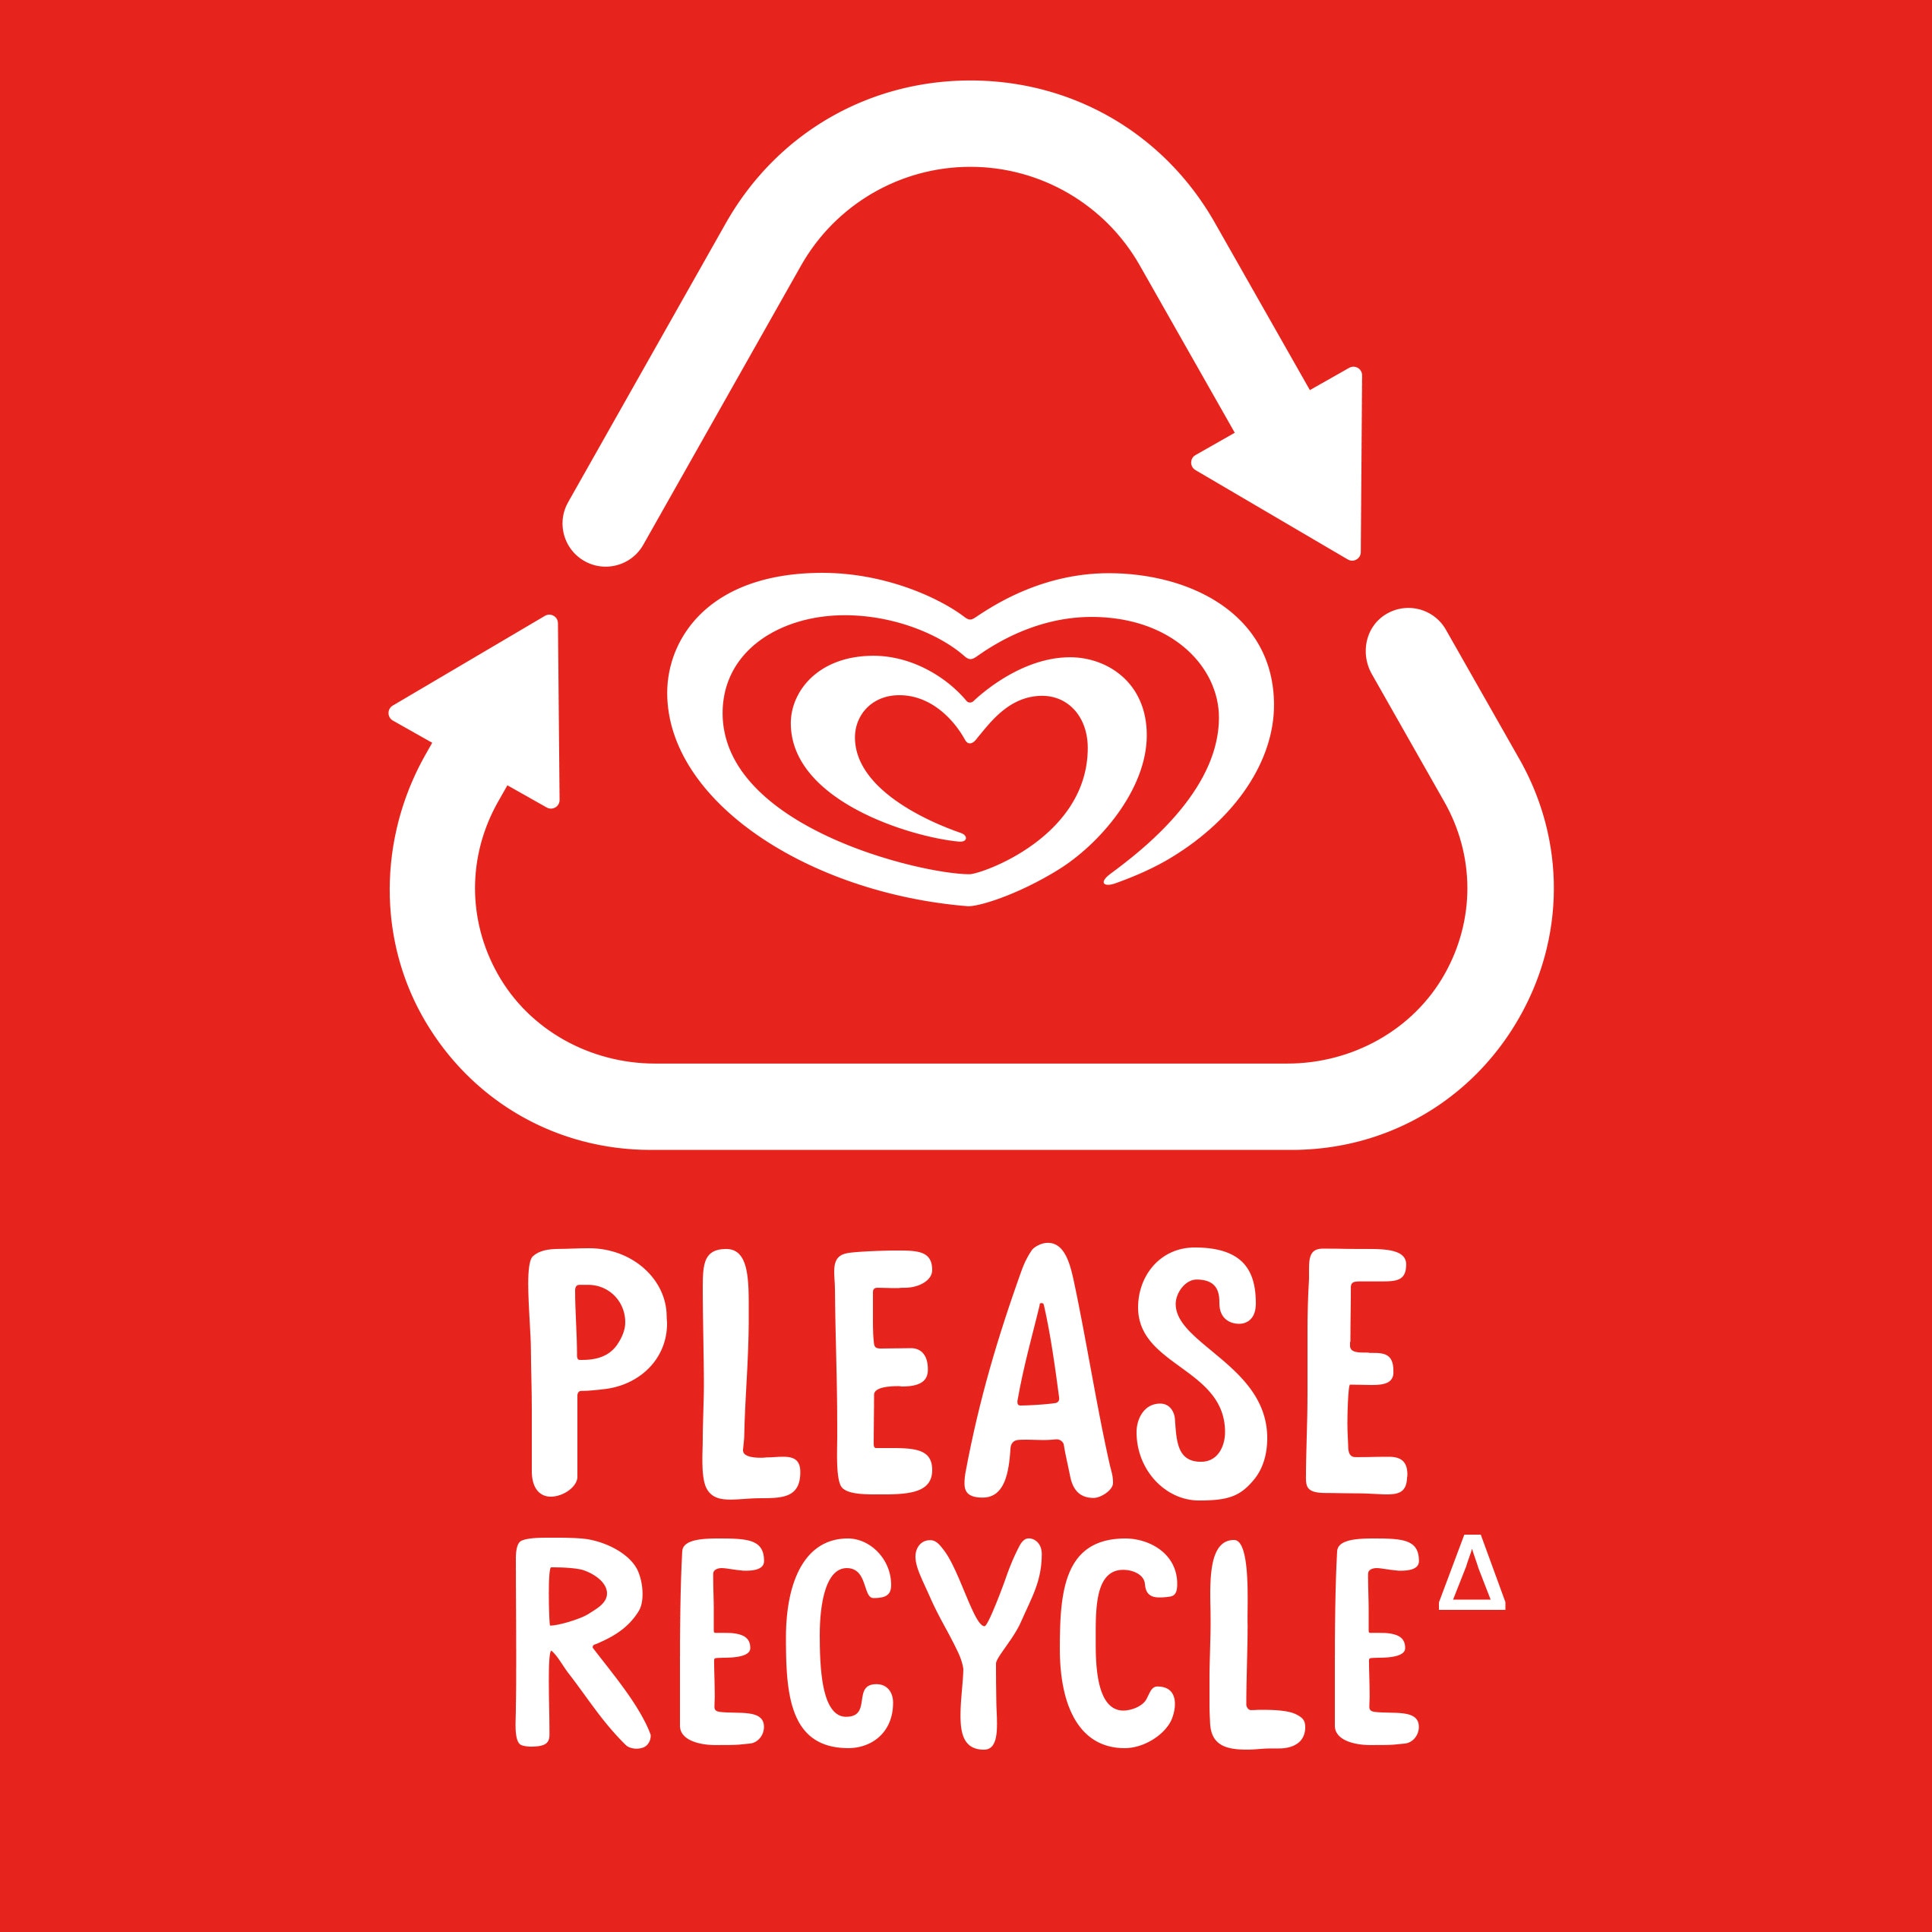 Please recycle logo 